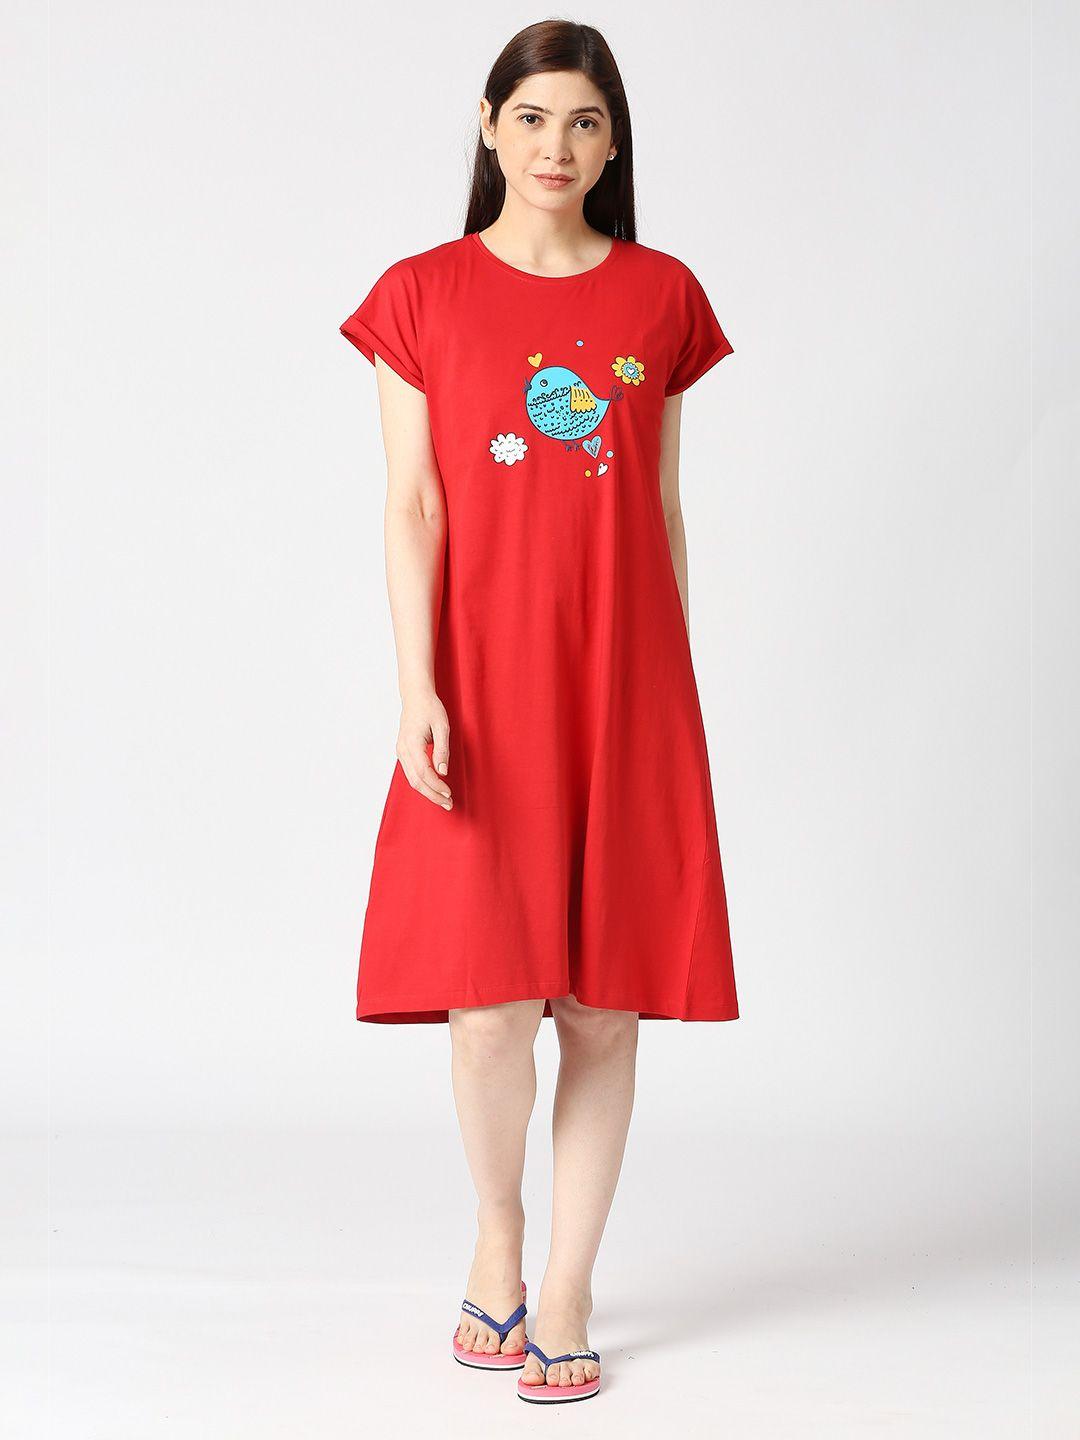 zebu graphic printed pure cotton t-shirt nightdress